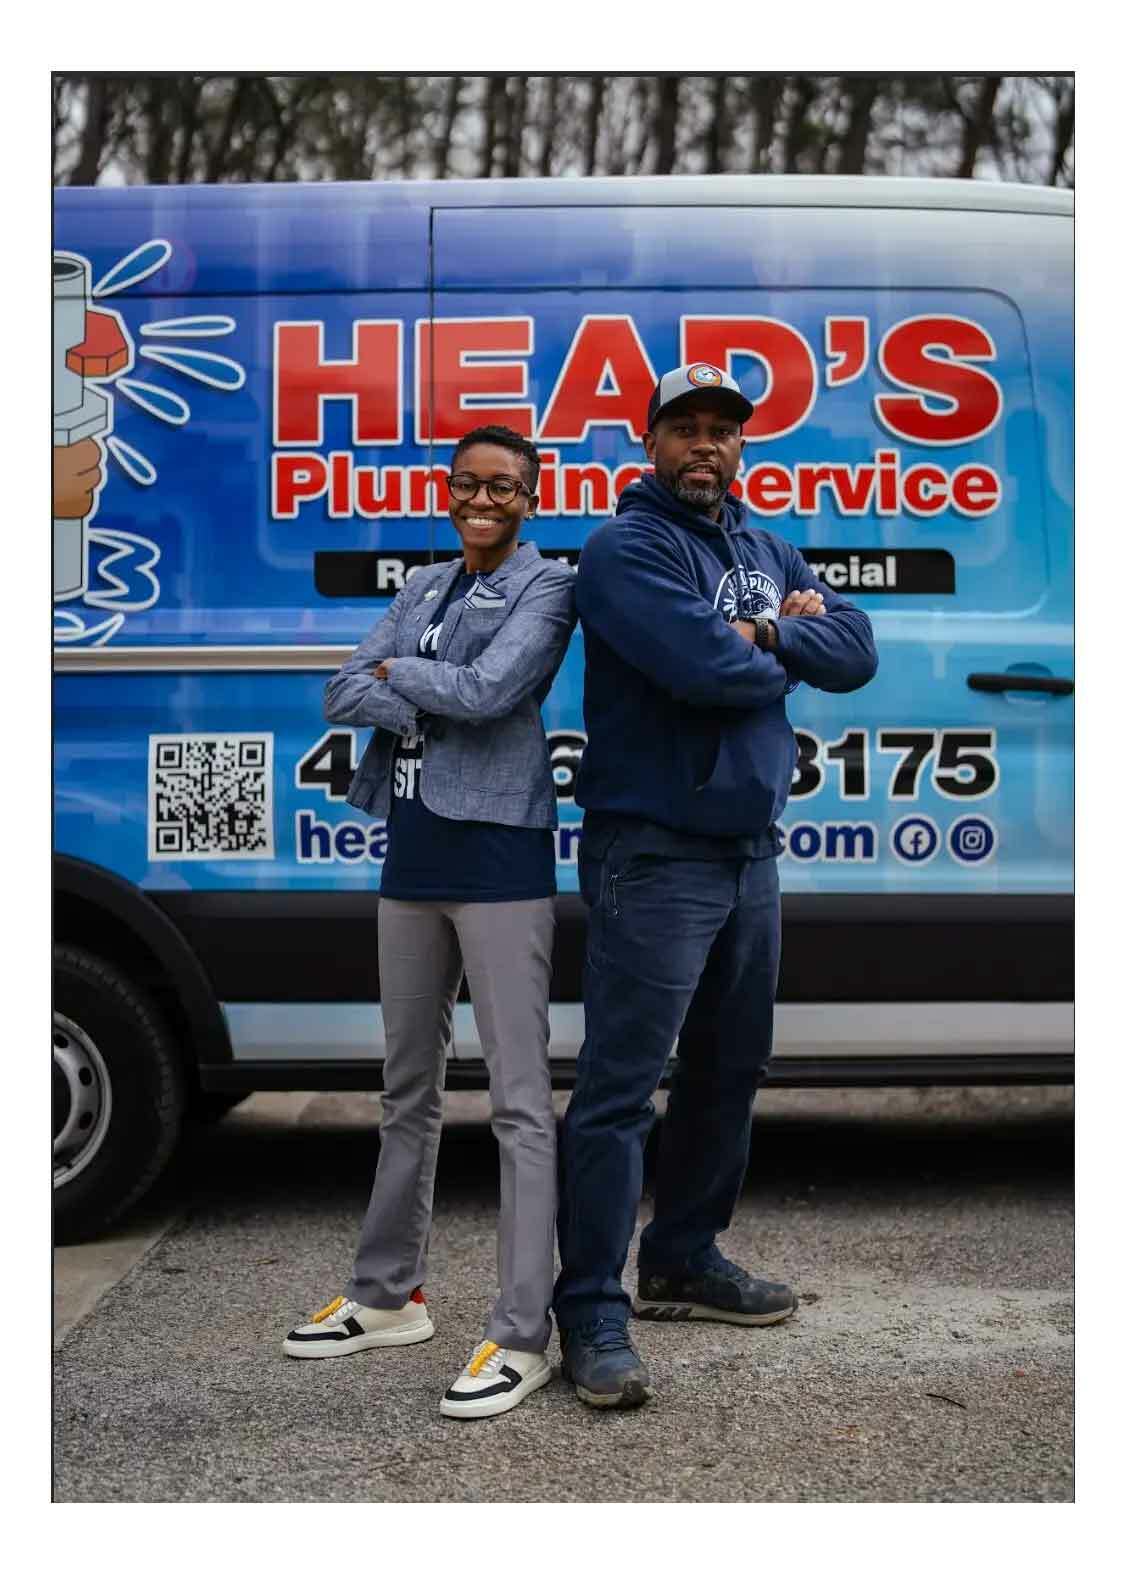 Heads Plumbing Service